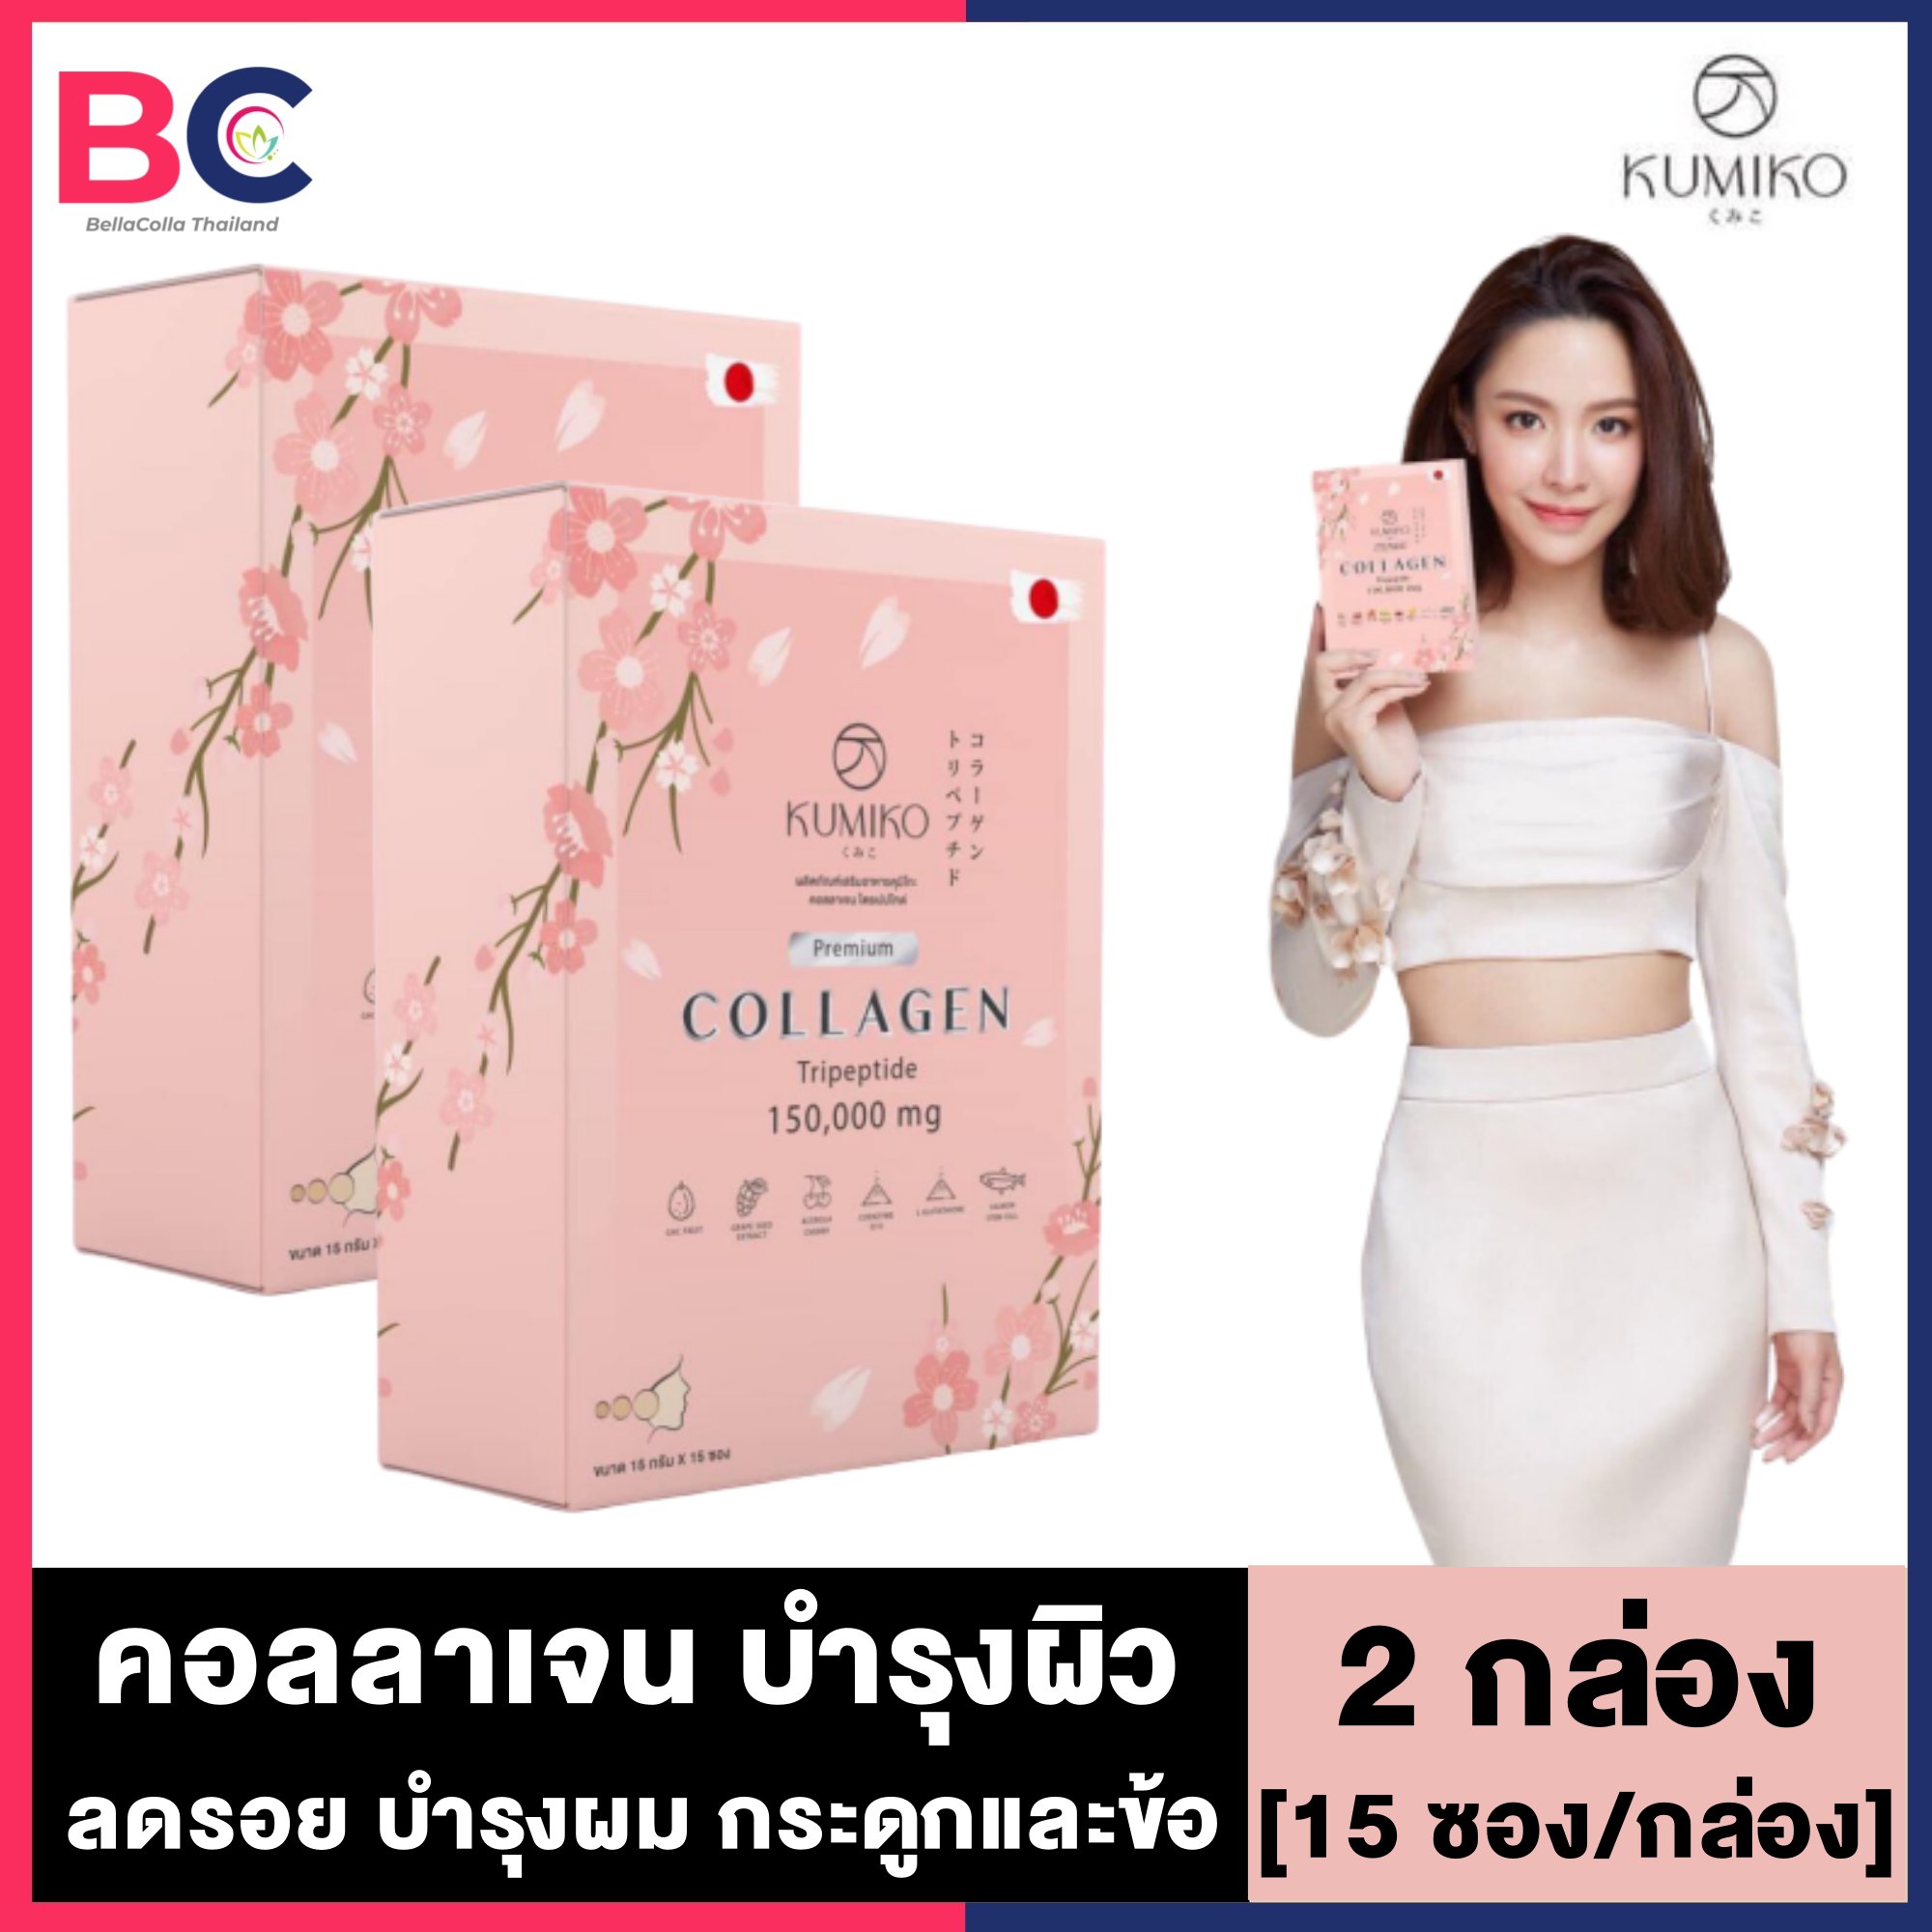 Kumiko Collagen [2 กล่อง] คูมิโกะ คอลลาเจนหน้าใส คอลลาเจนแท้ Kimiko Collagen ผง BellaColla Thailand